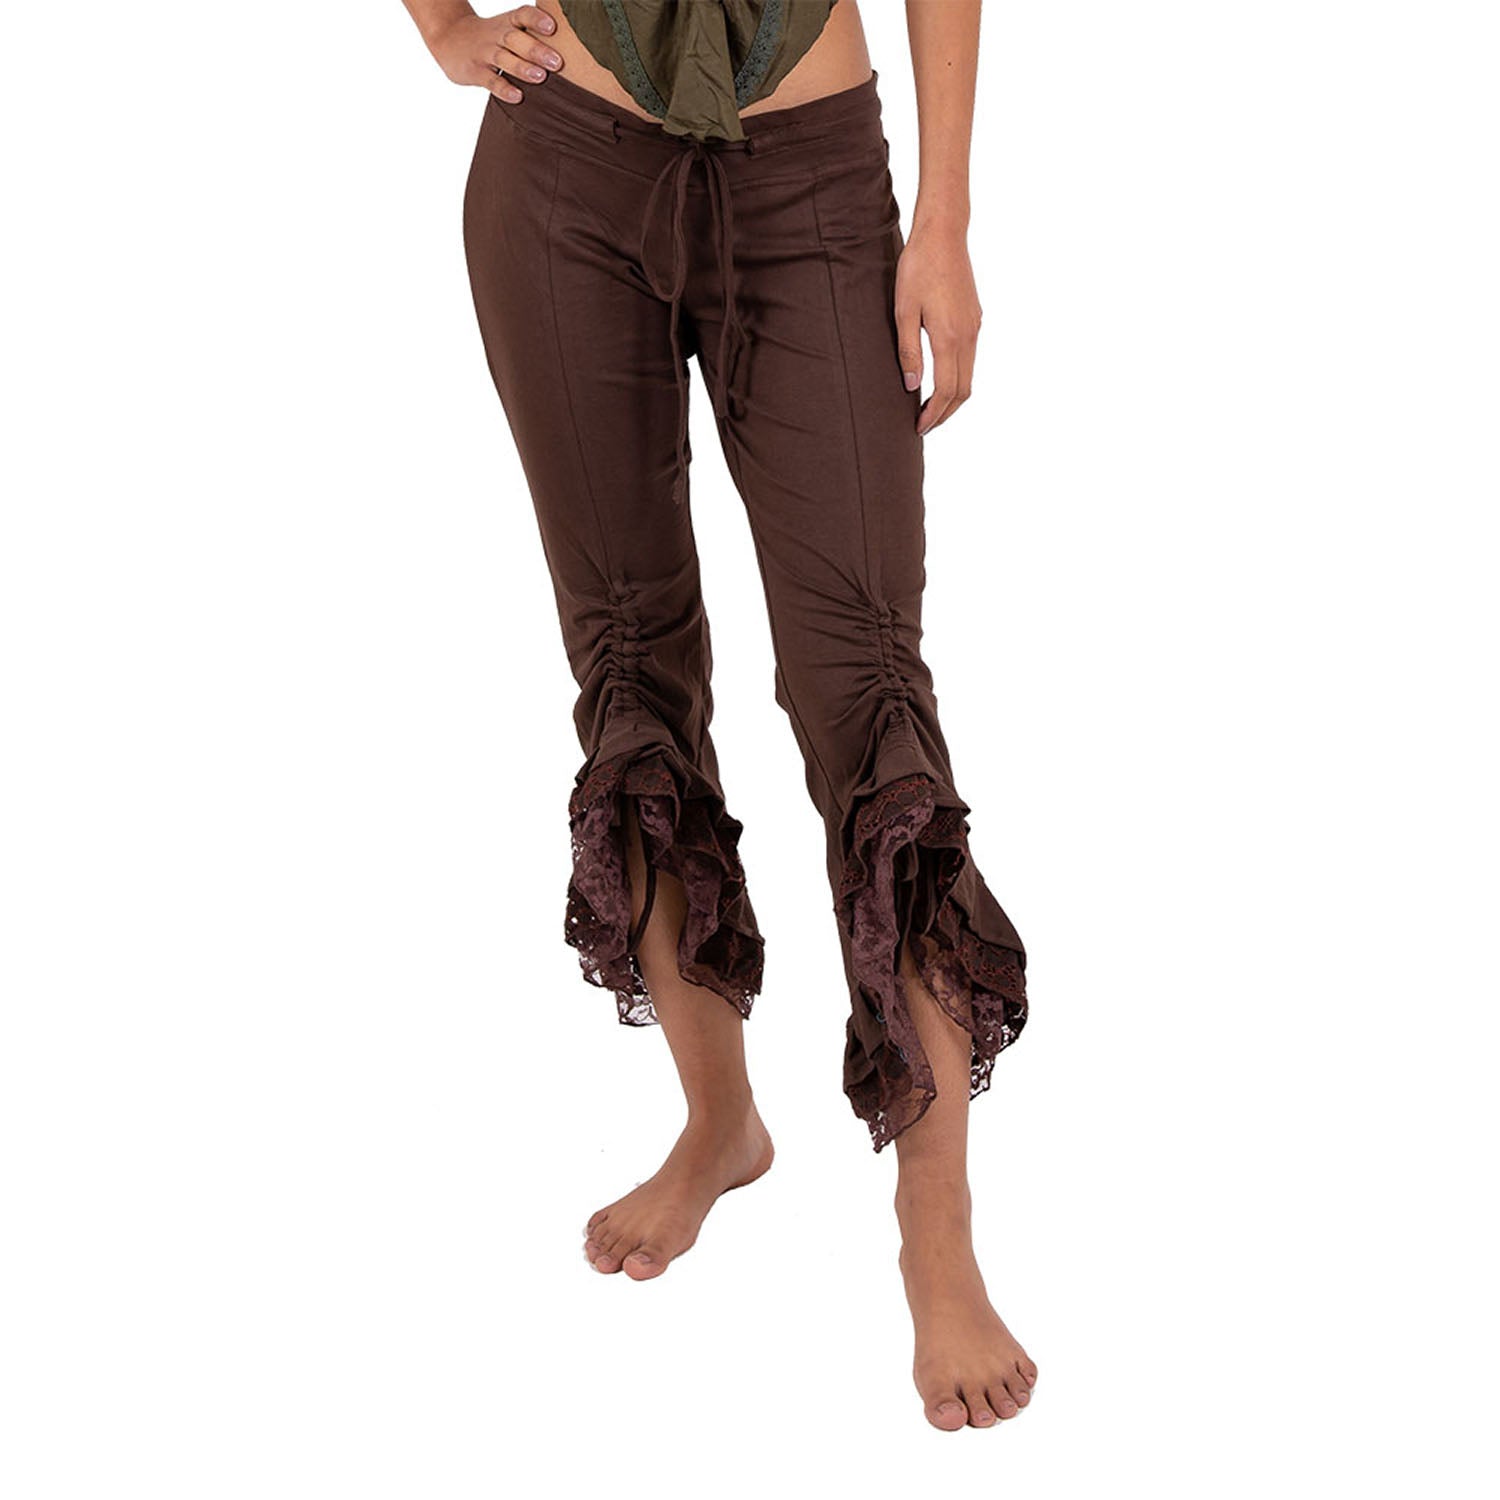 Festival Lacy Leggings, Bohemian Clothing, Pixie Pants